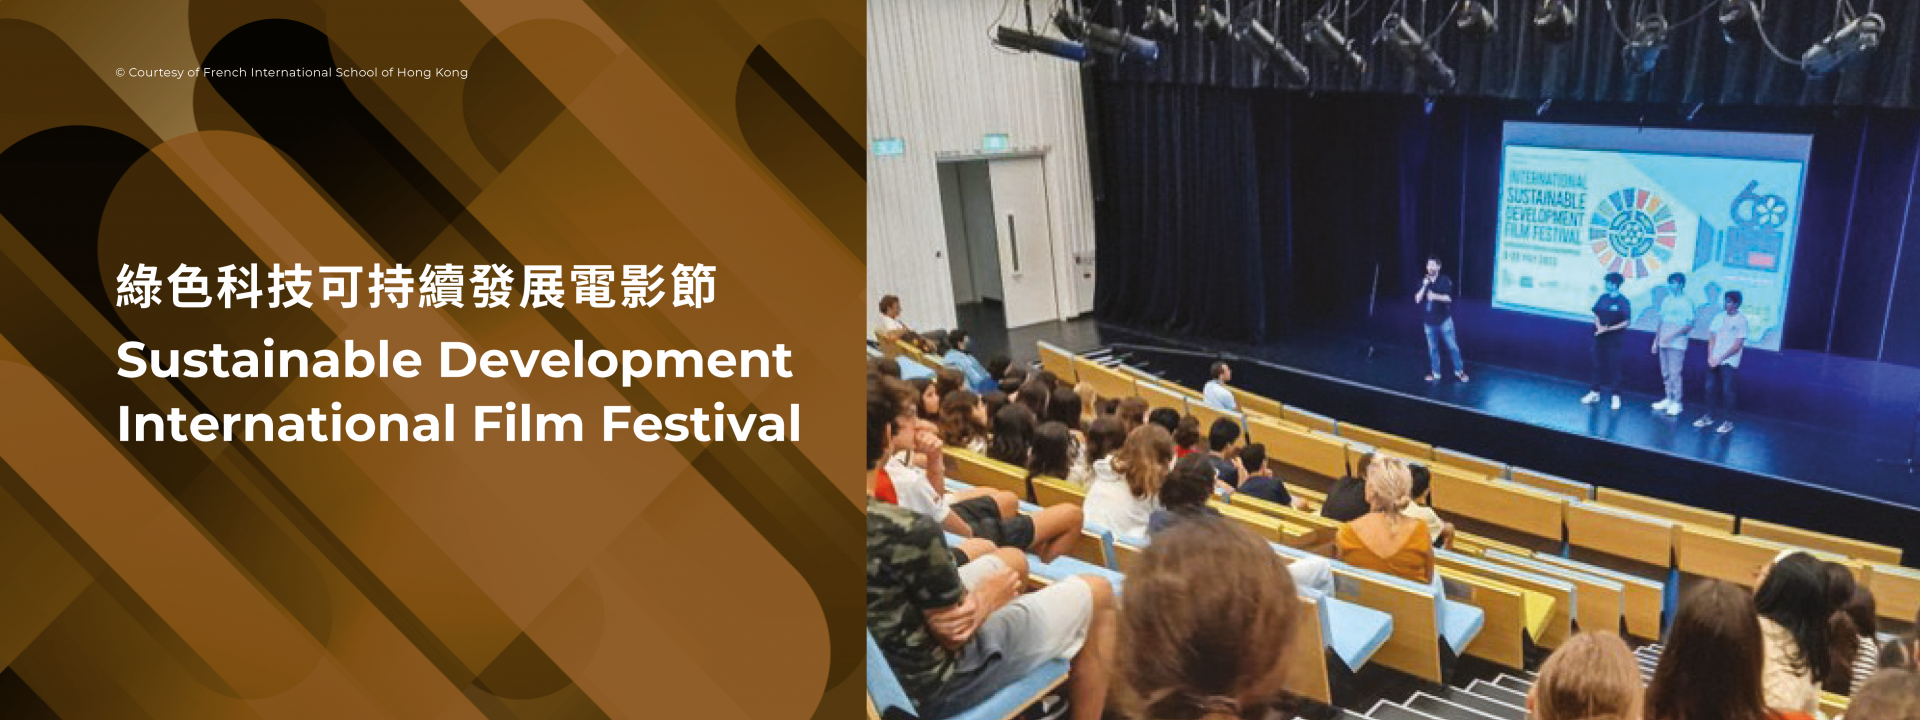 Sustainable Development International Film Festival